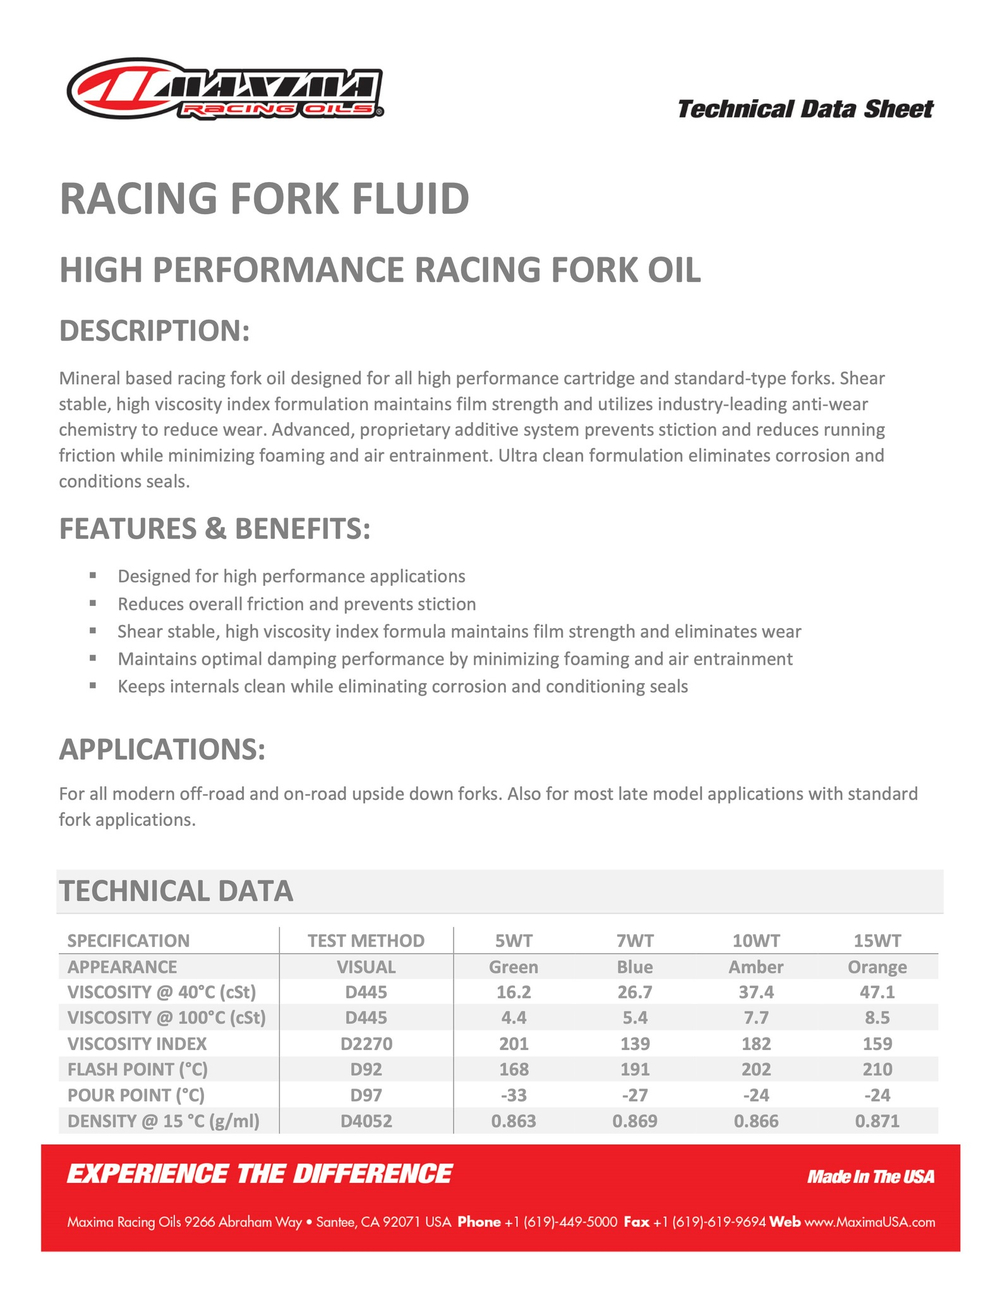 Maxima RACING FORK FLUID (5wt вилочное масло)